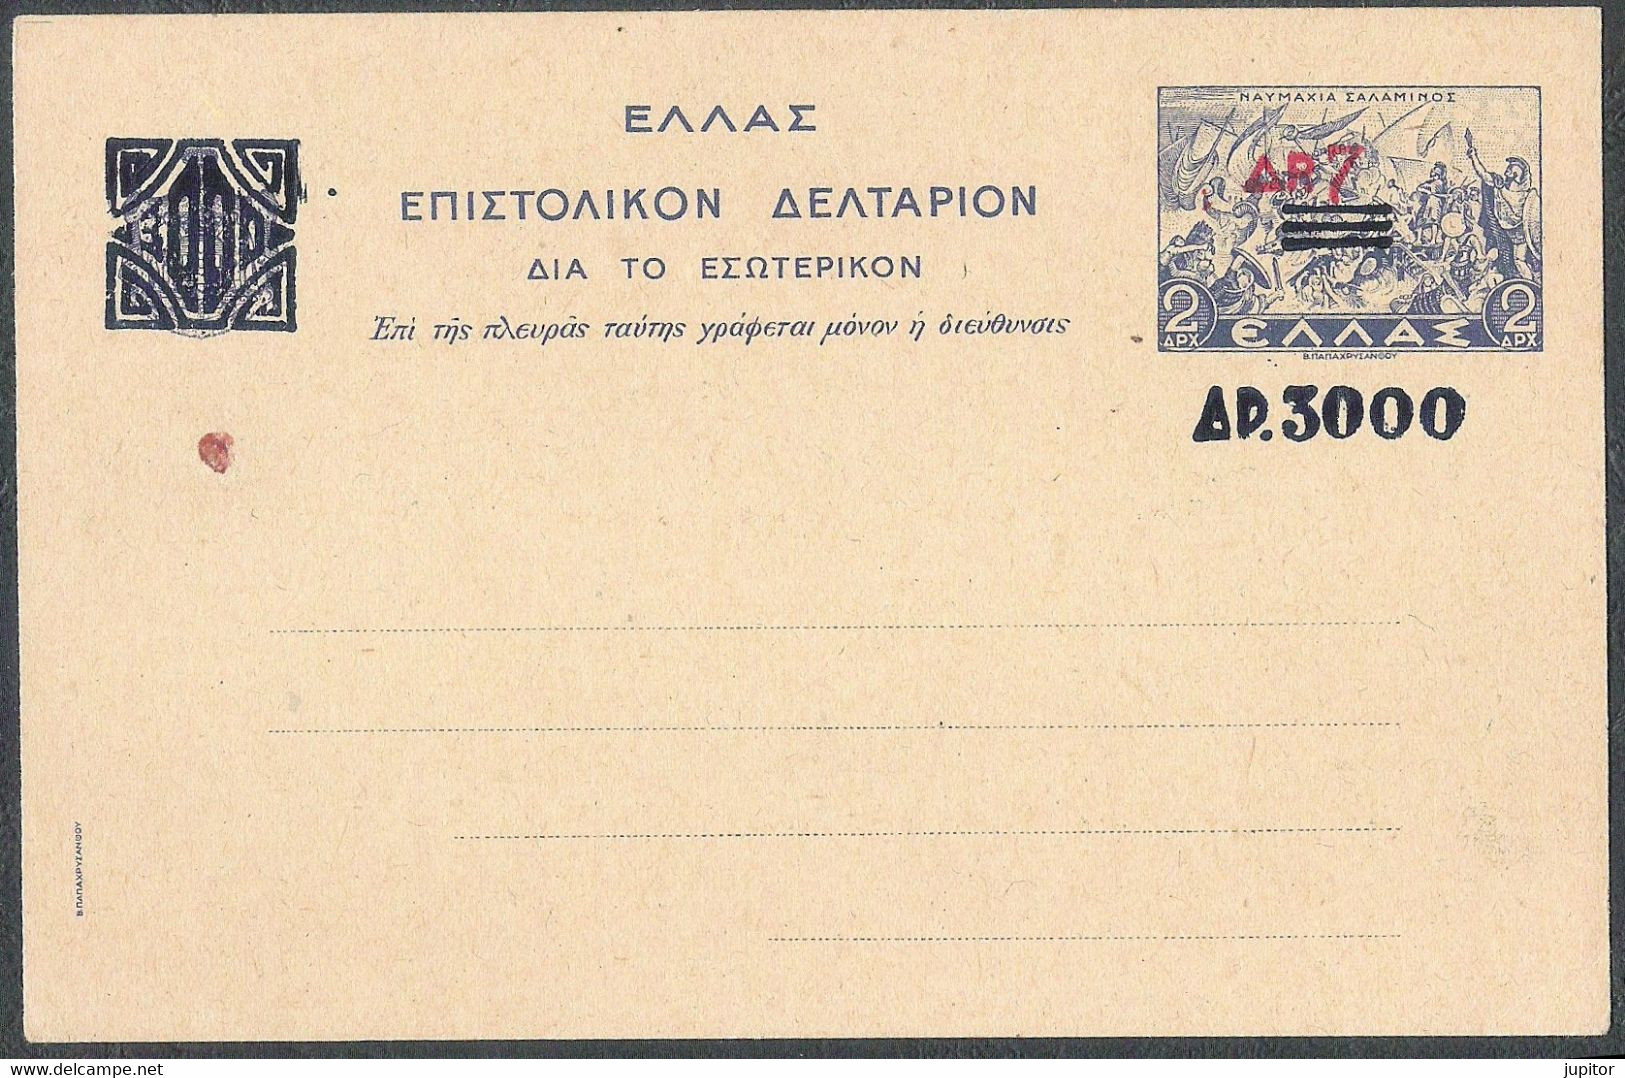 Greece Prepaid Postal Card With New Value UNUSED - Postal Stationery